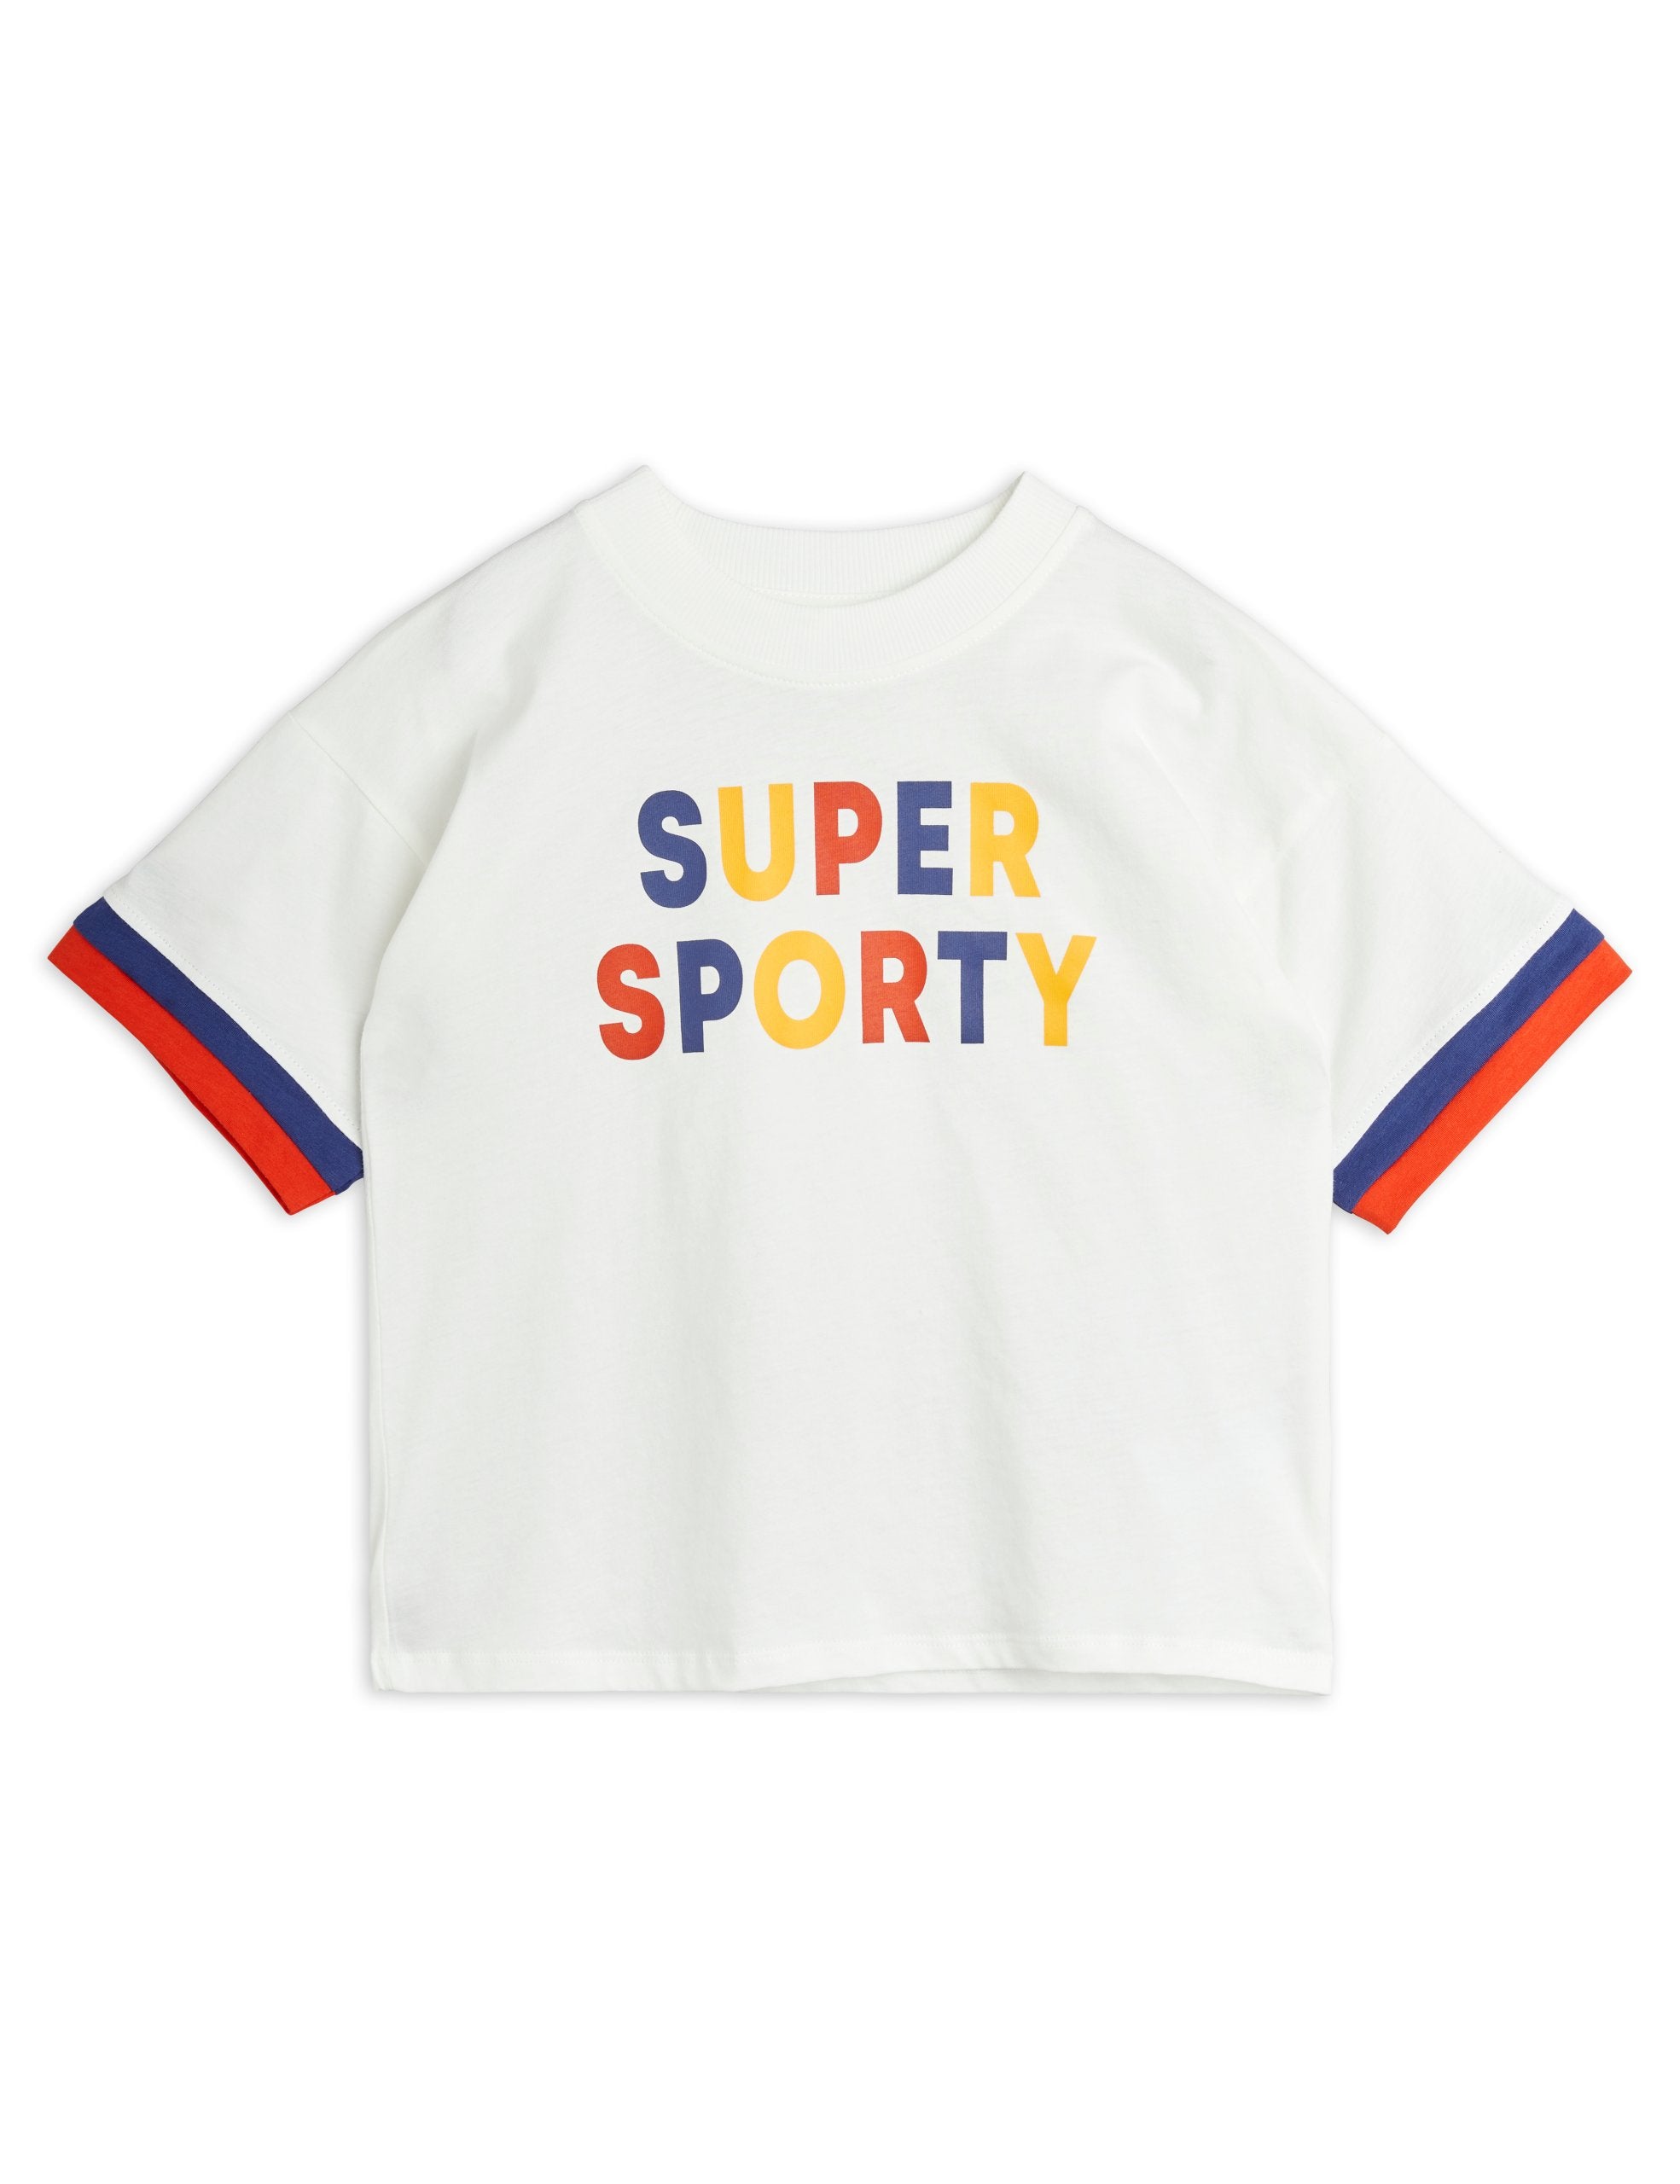 Mini Rodini | Super sporty sp ss tee white